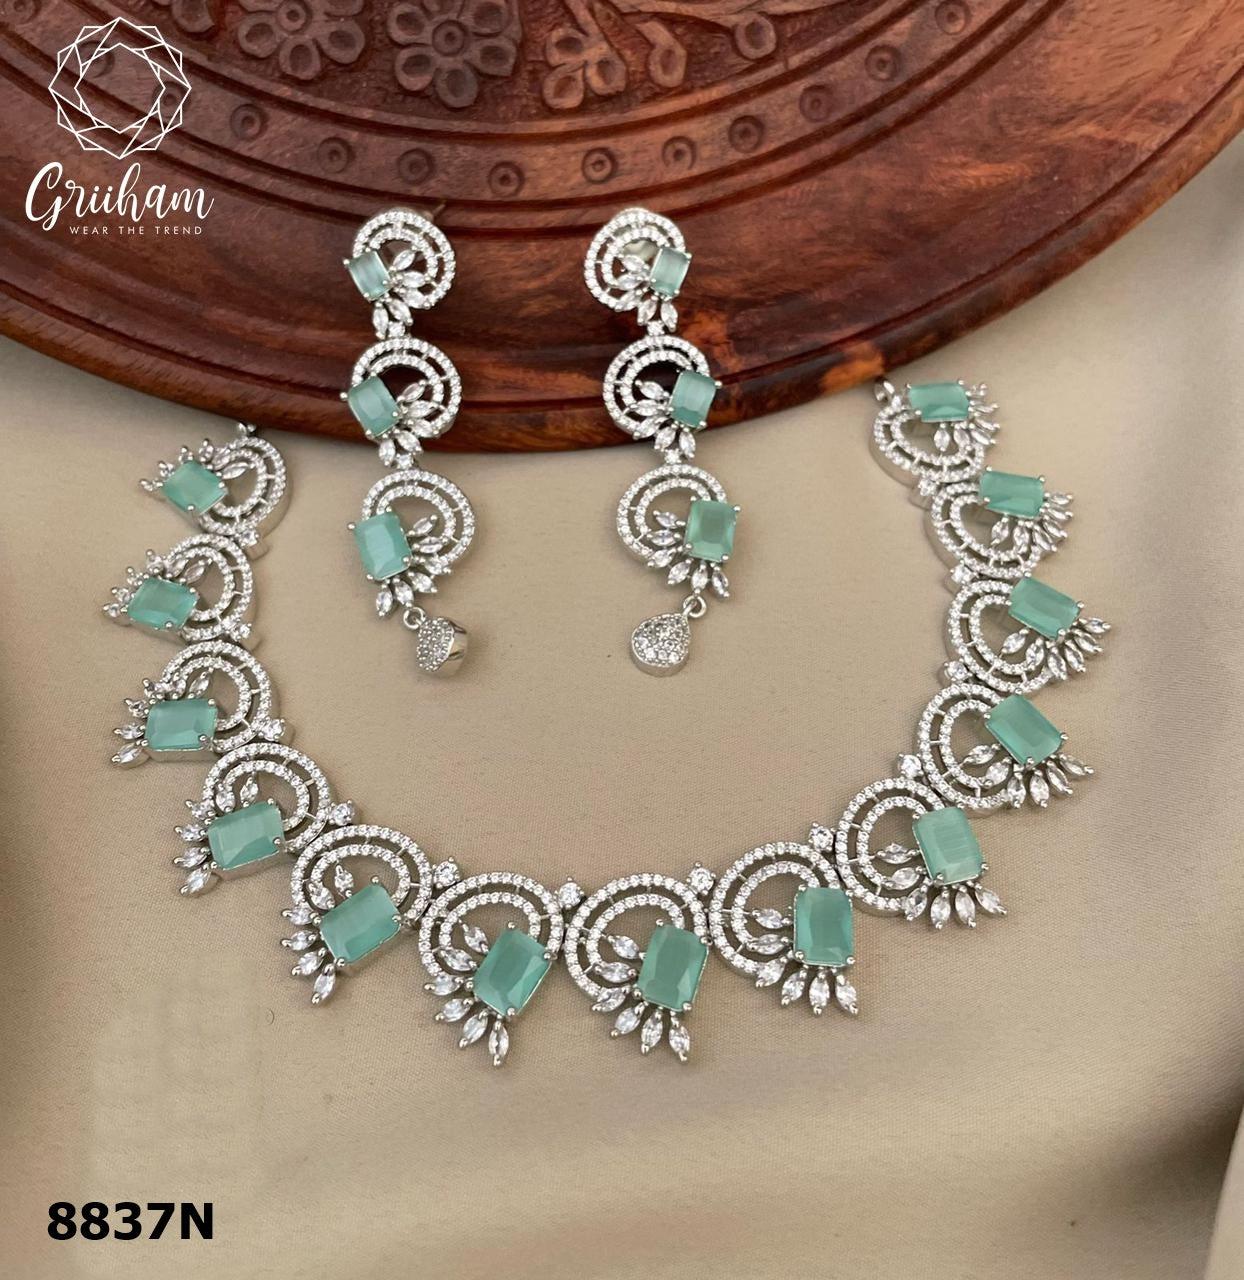 Premium White Gold Plated with sparkling Mint green CZ stones Designer Necklace Set 8837N-Necklace Set-Griiham-Griiham